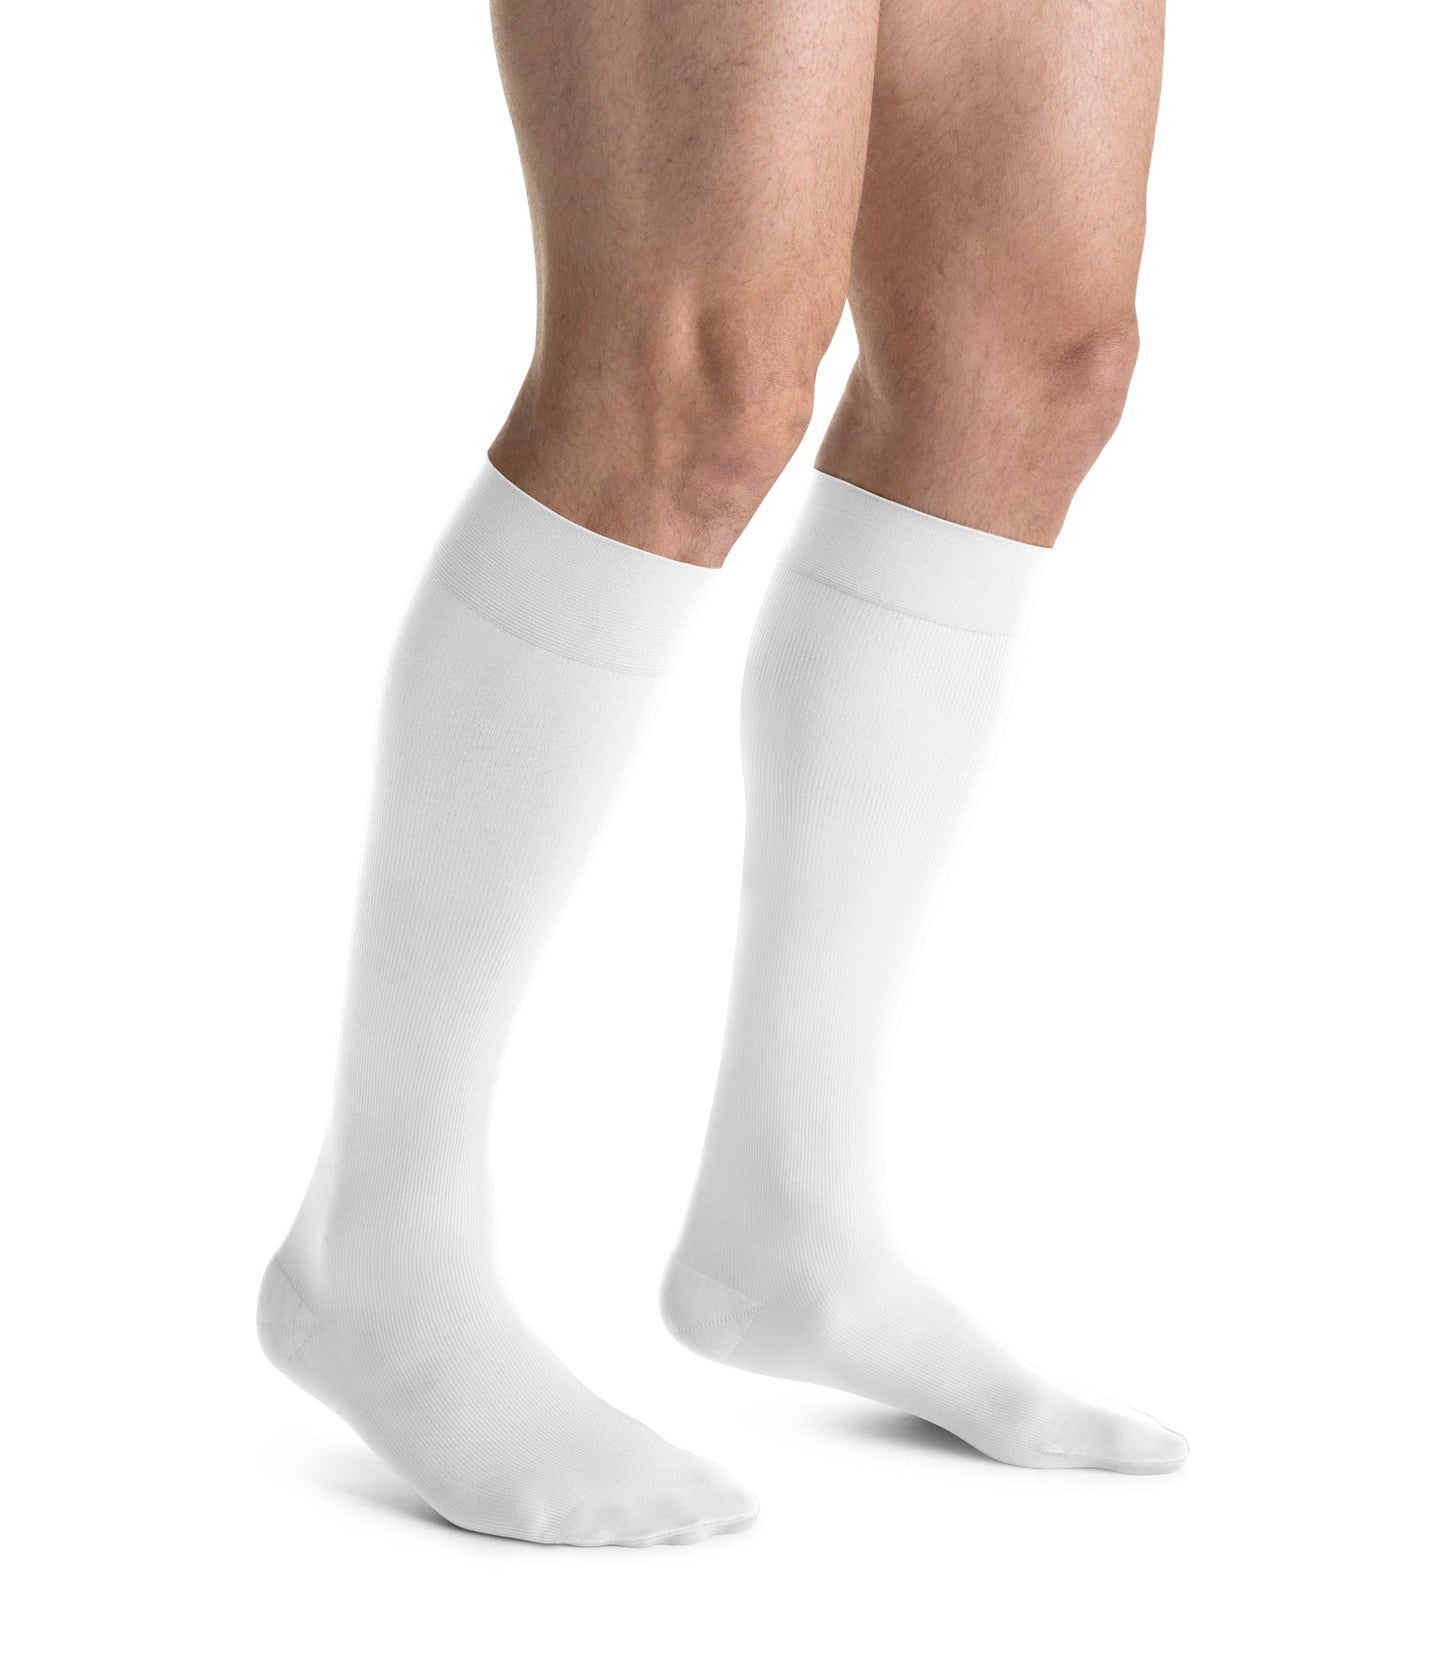 JOBST forMen Compression Socks 20-30  mmHg Knee High Closed Toe